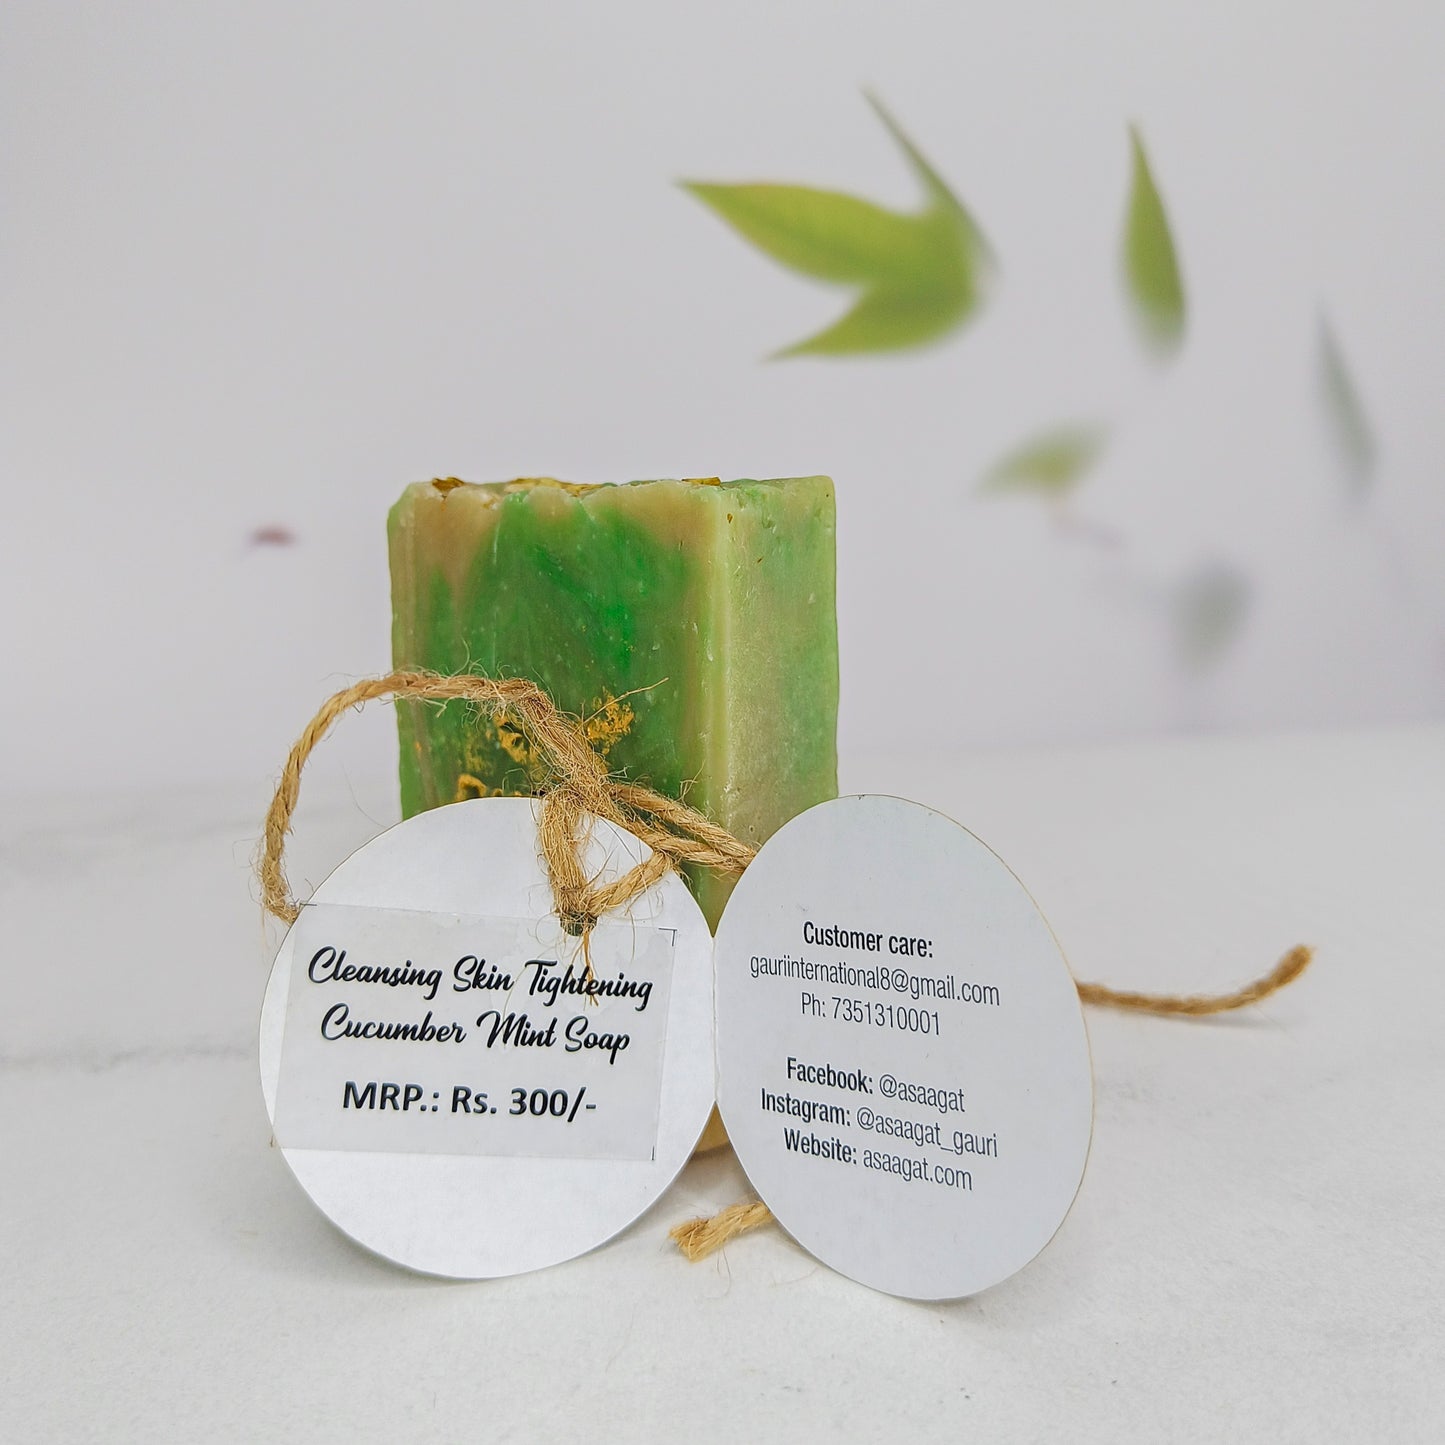 Cleansing Skin Tightening Cucumber Mint Soap